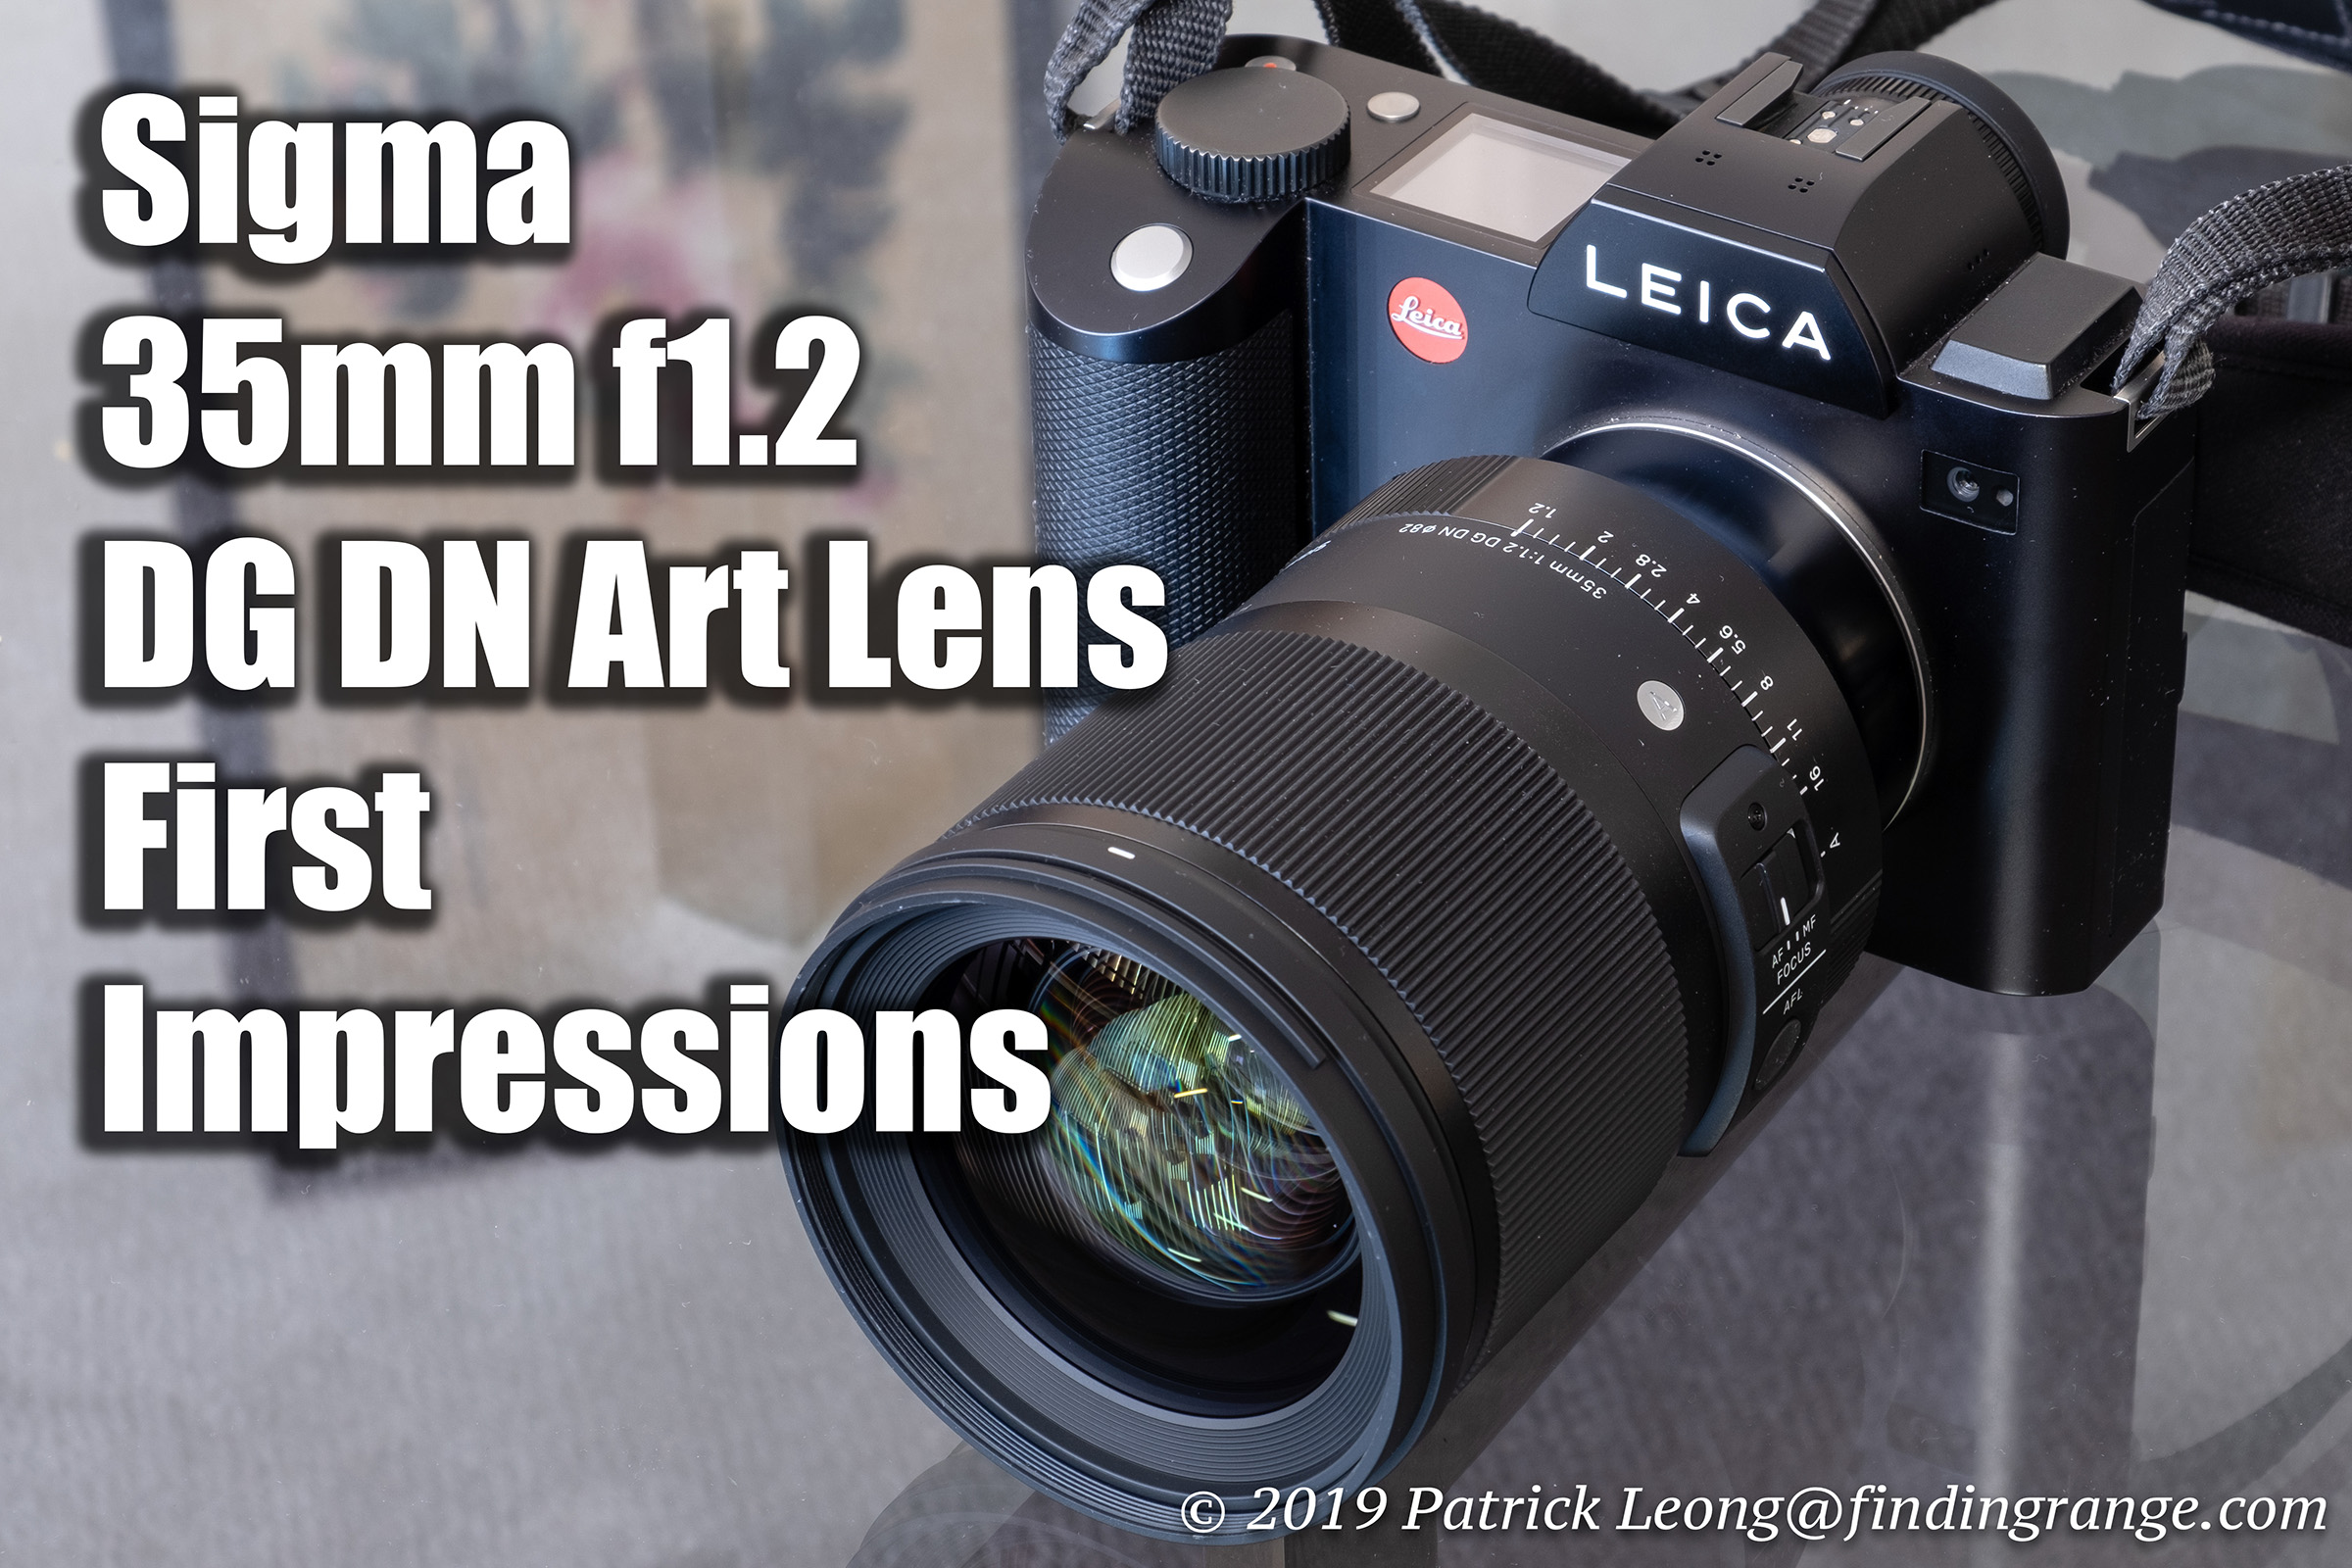 Sigma 35mm f1.2 DG DN Art Lens First Impressions L Mount